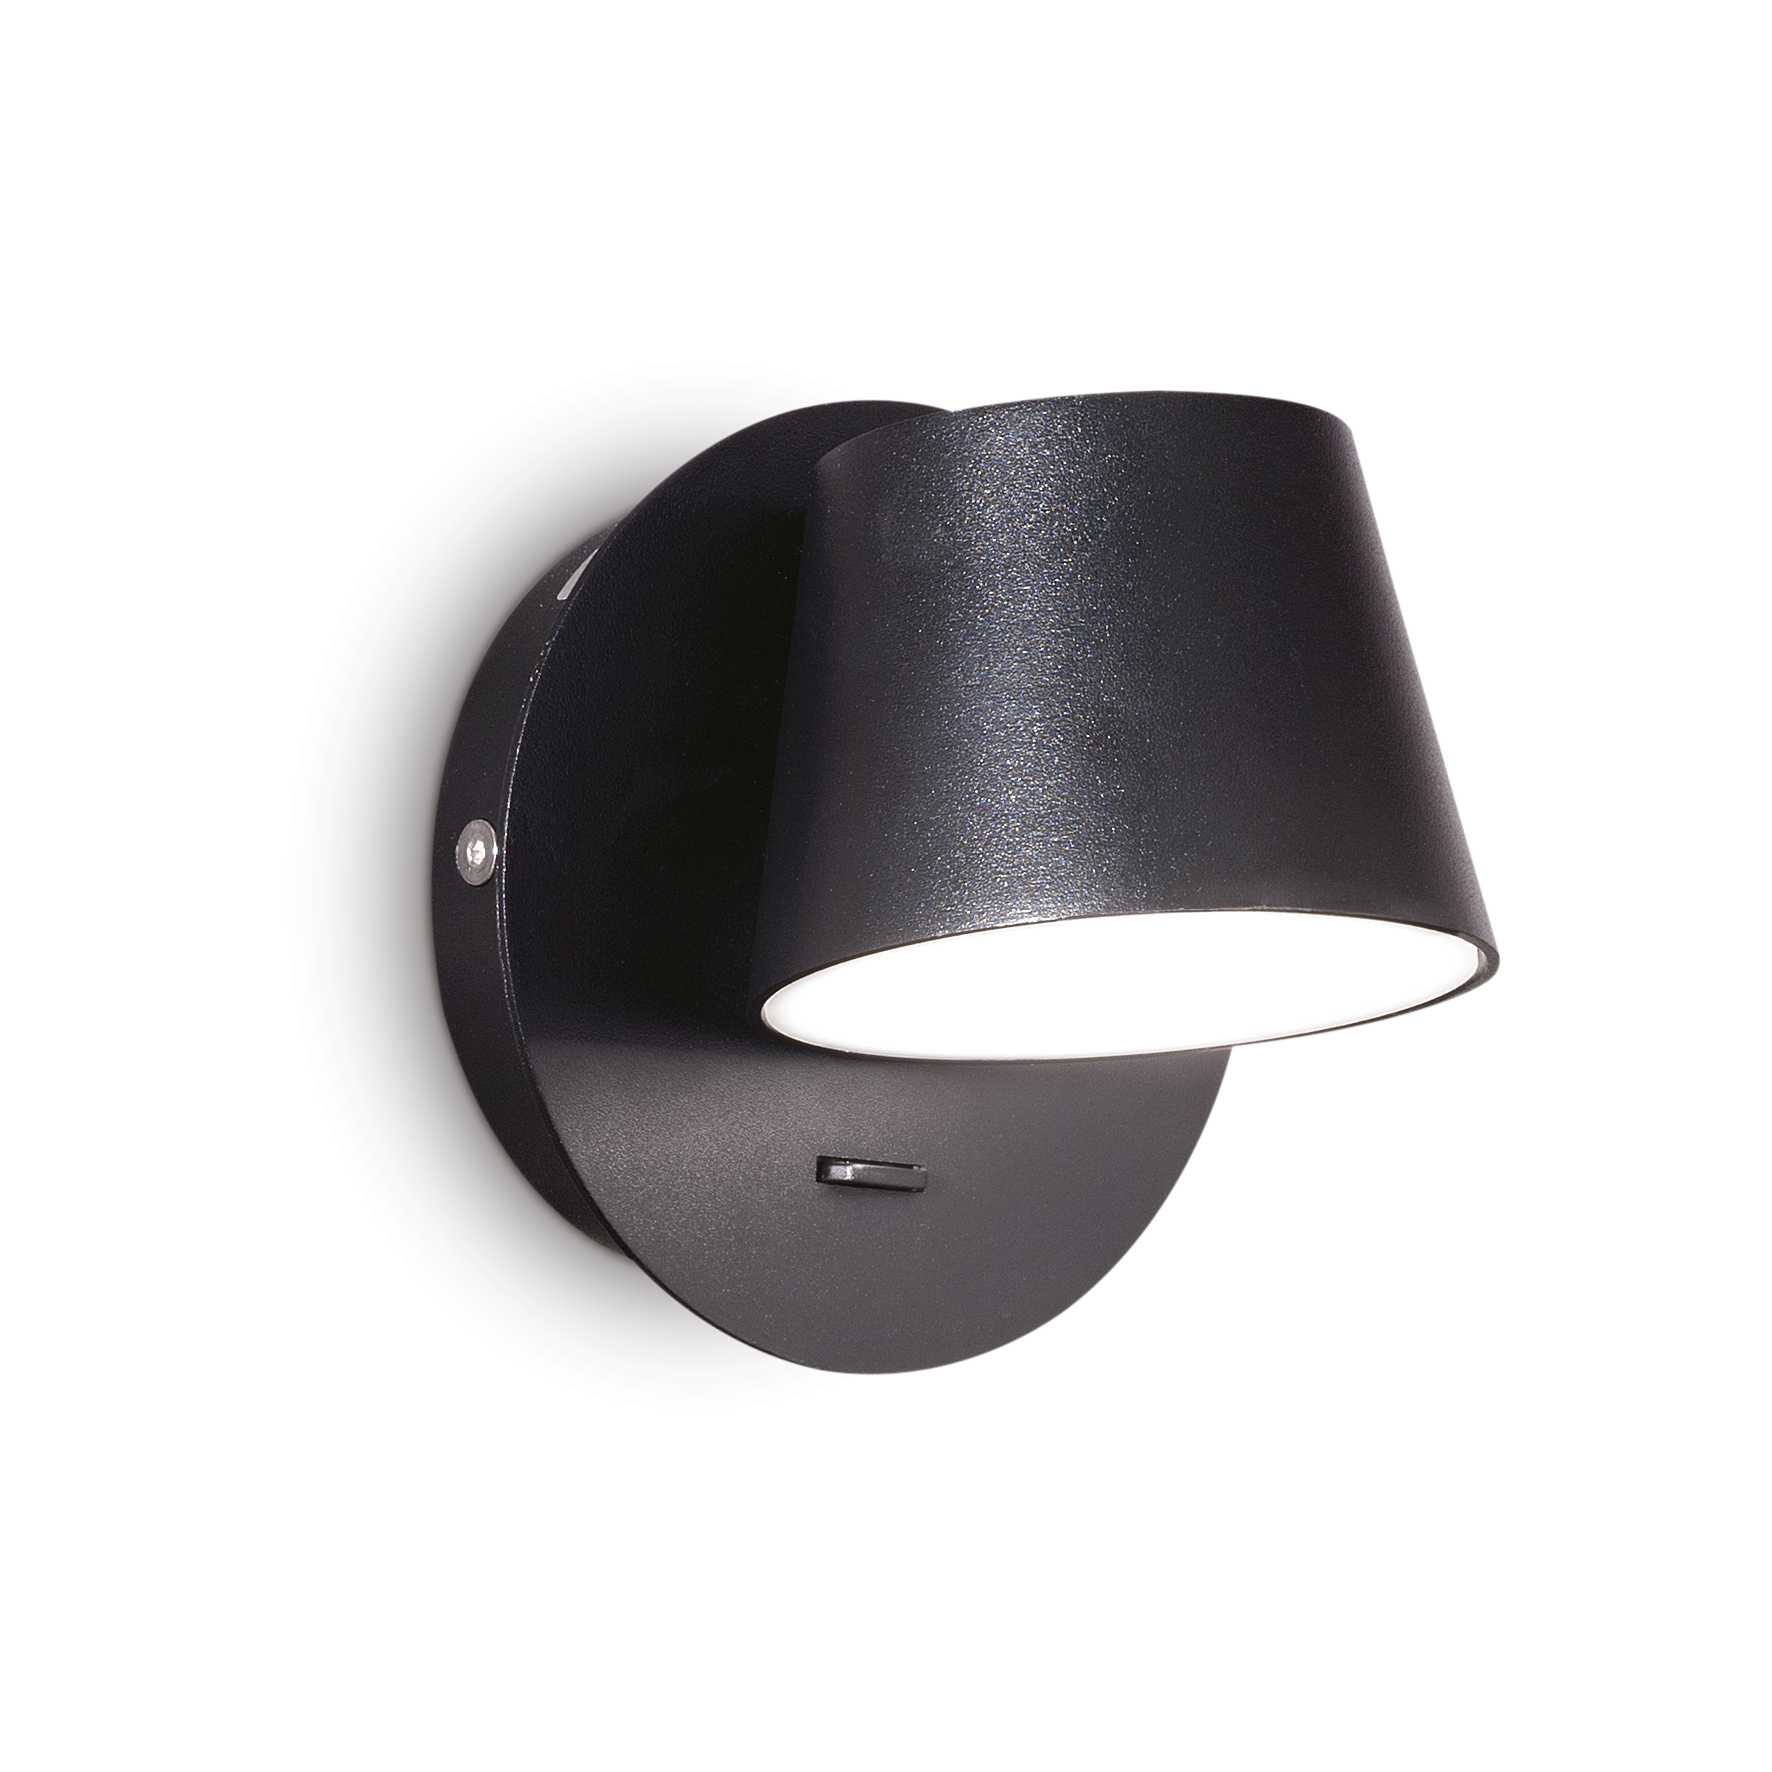 AD hotelska oprema Zidna lampa Gim ap- Crne boje slika proizvoda